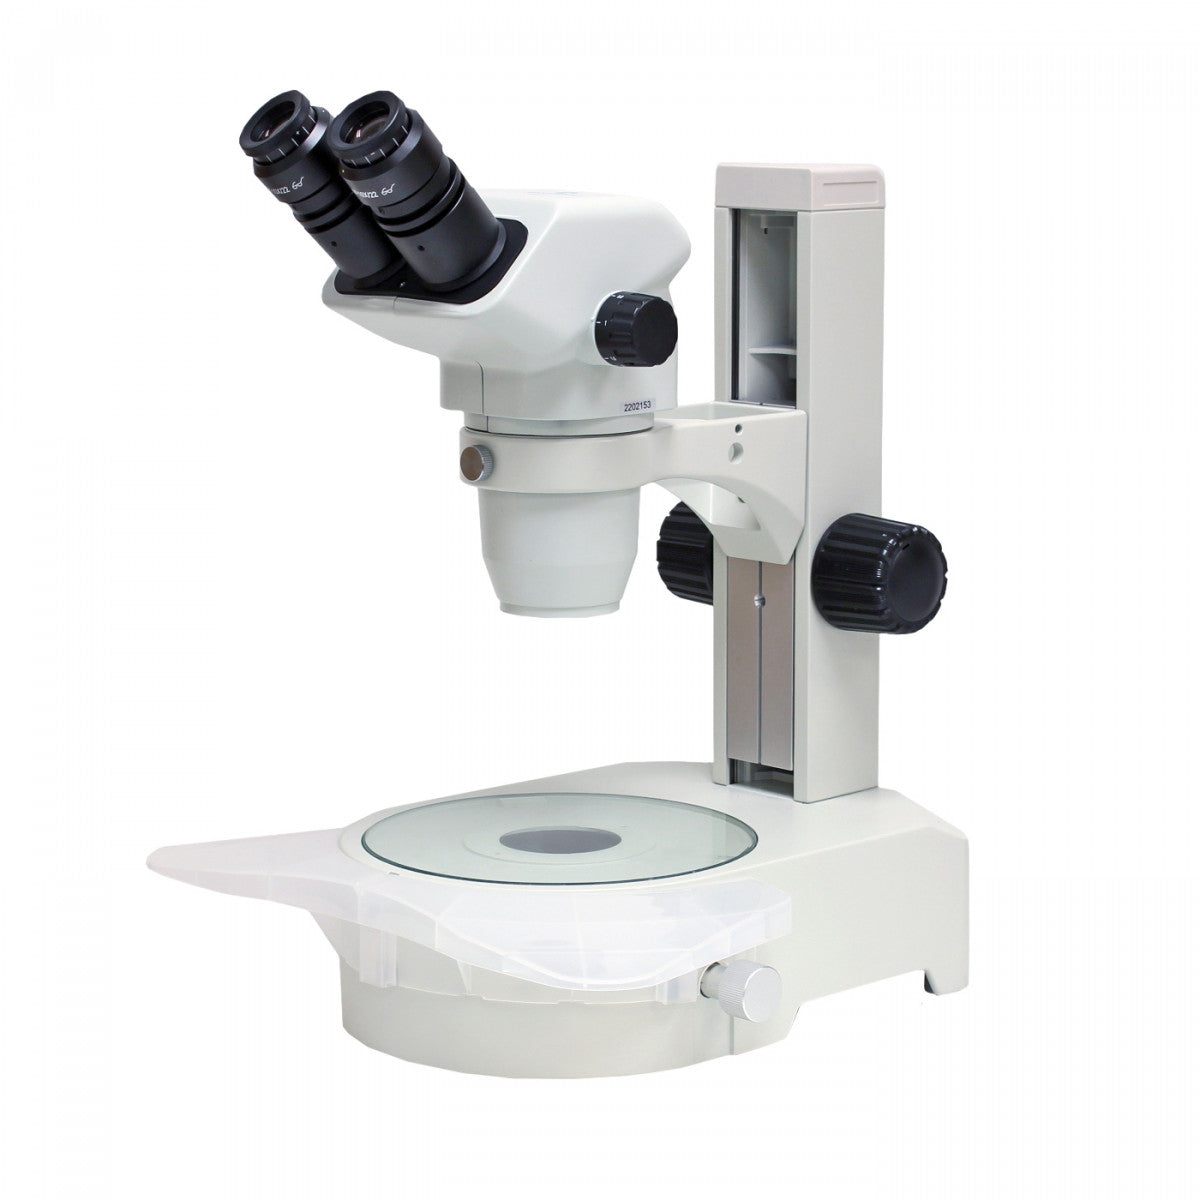 Accu-Scope 3075 Embryo Transplant Microscope